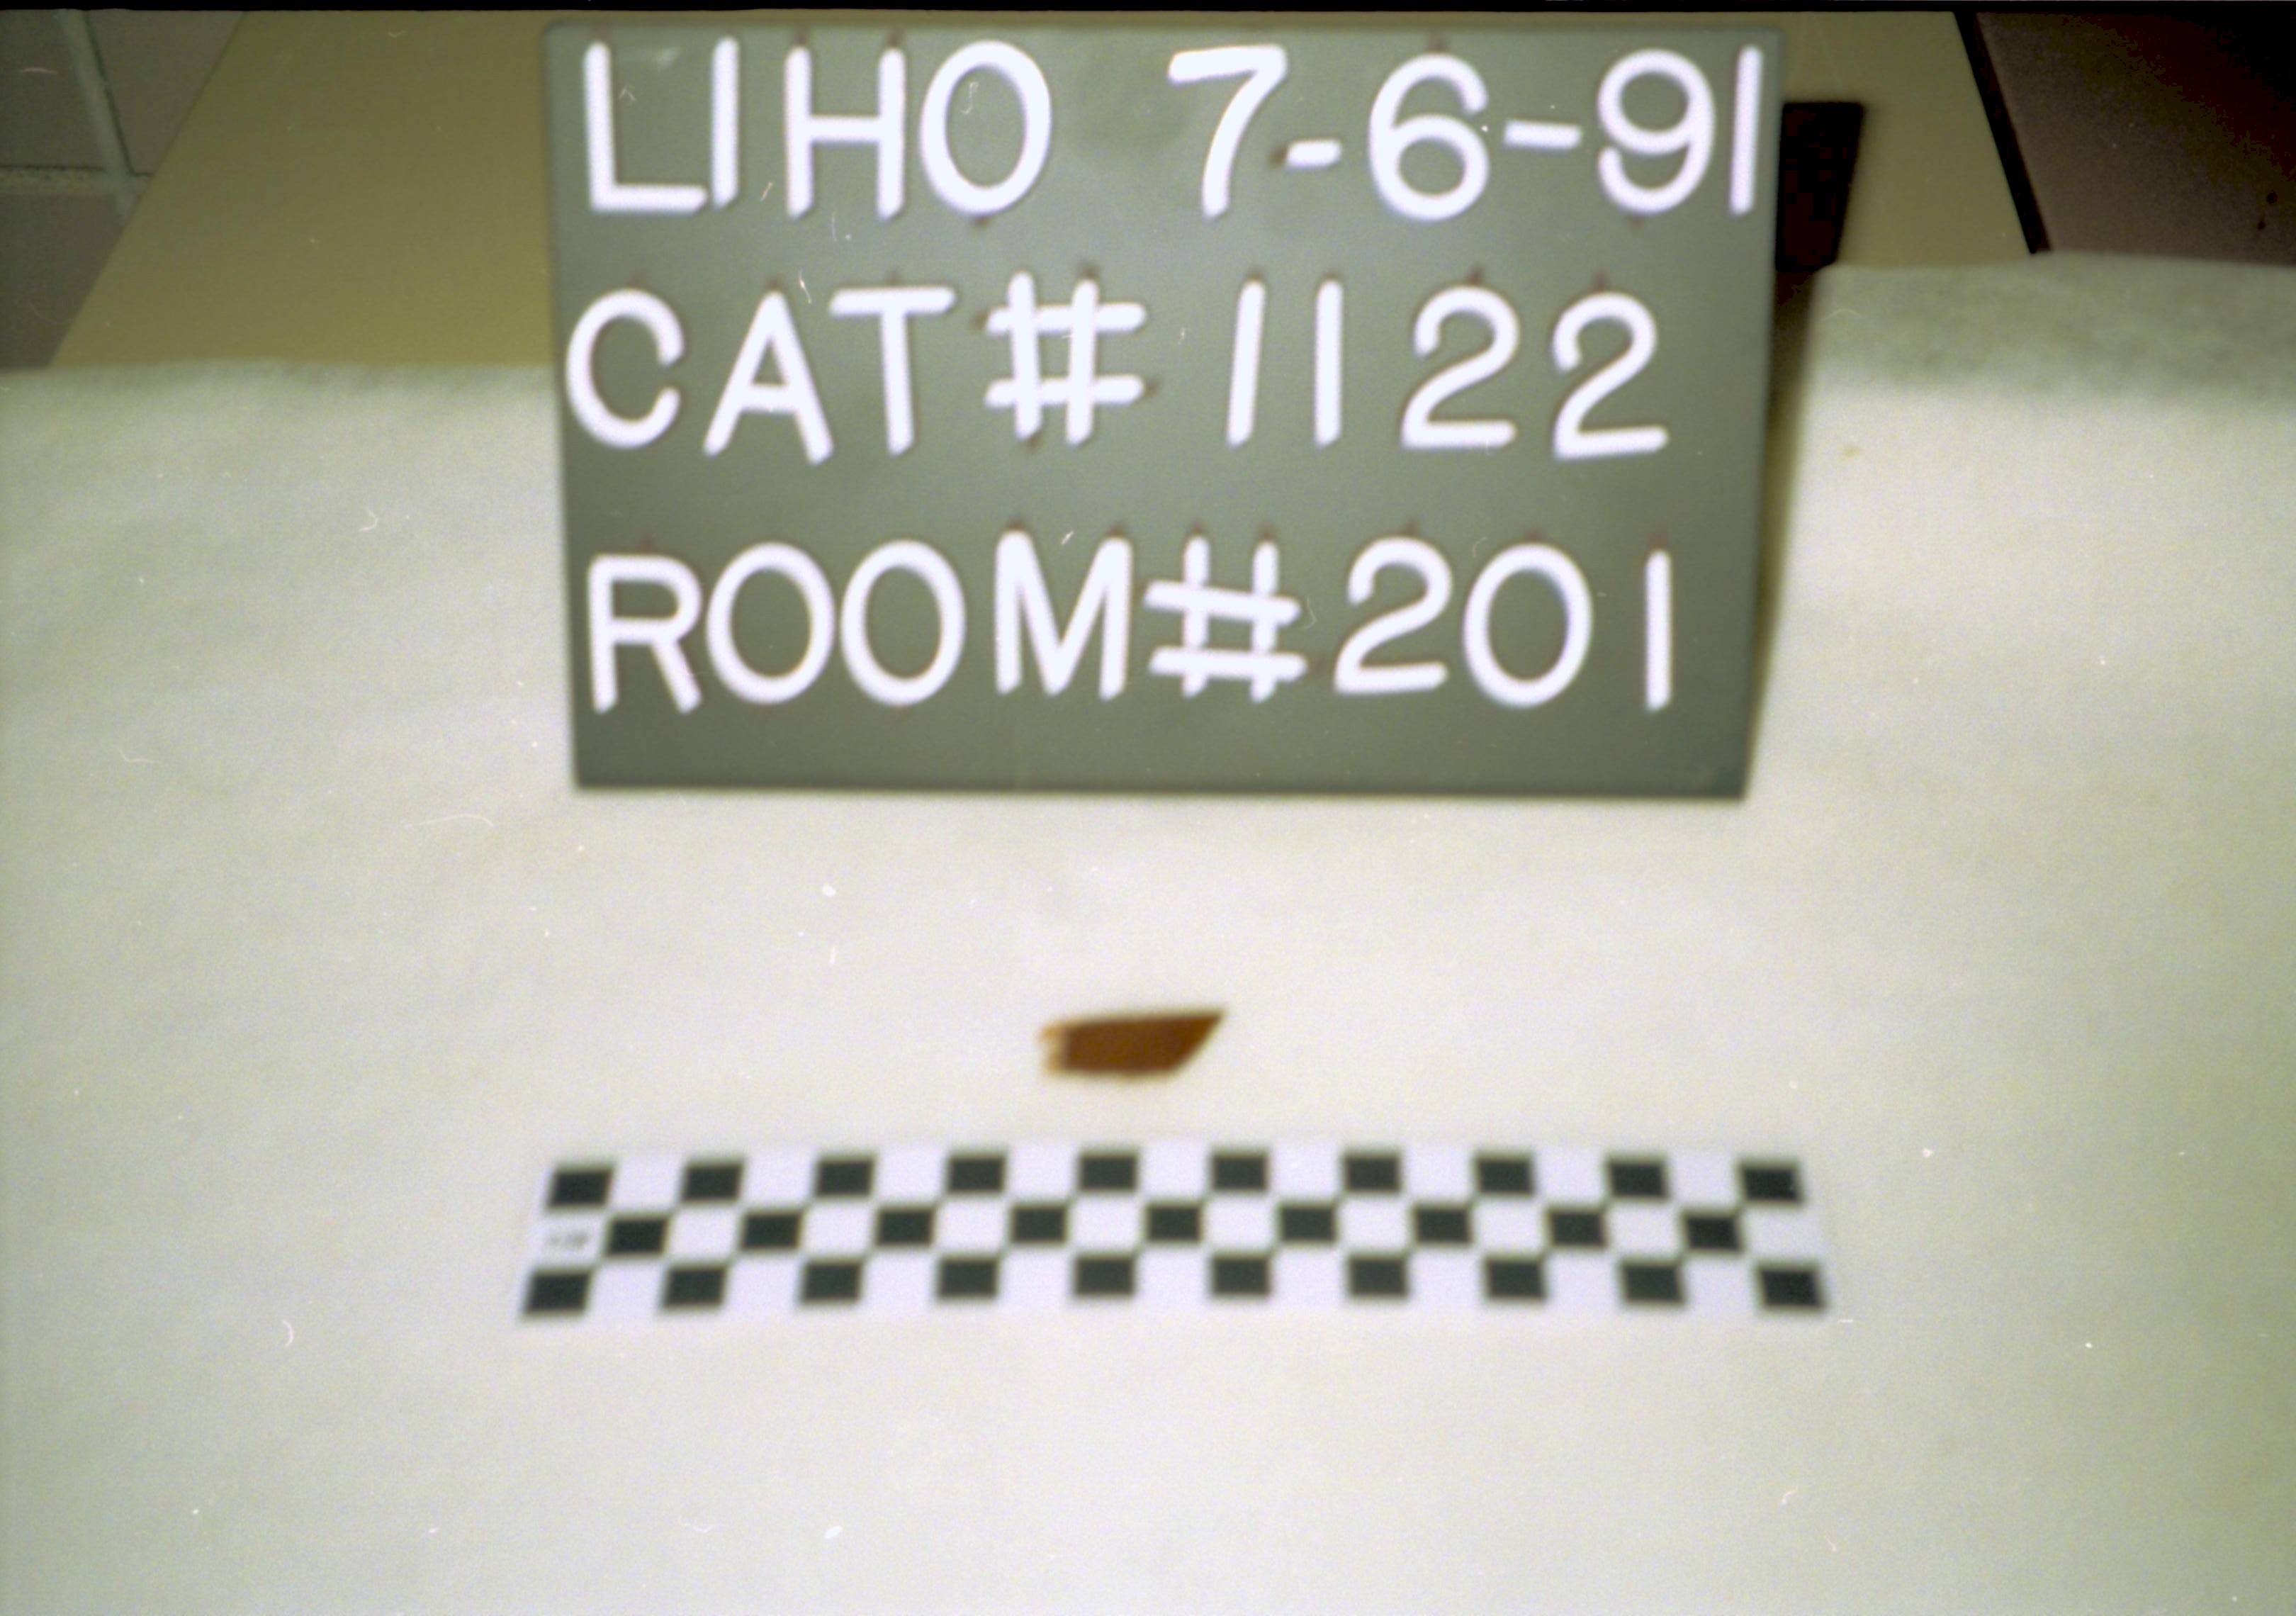 LIHO 7-6-91 CAT#1122 ROOM#201 (Neg. sleeve (Veneer) Lincoln, Home, artifacts, dresser